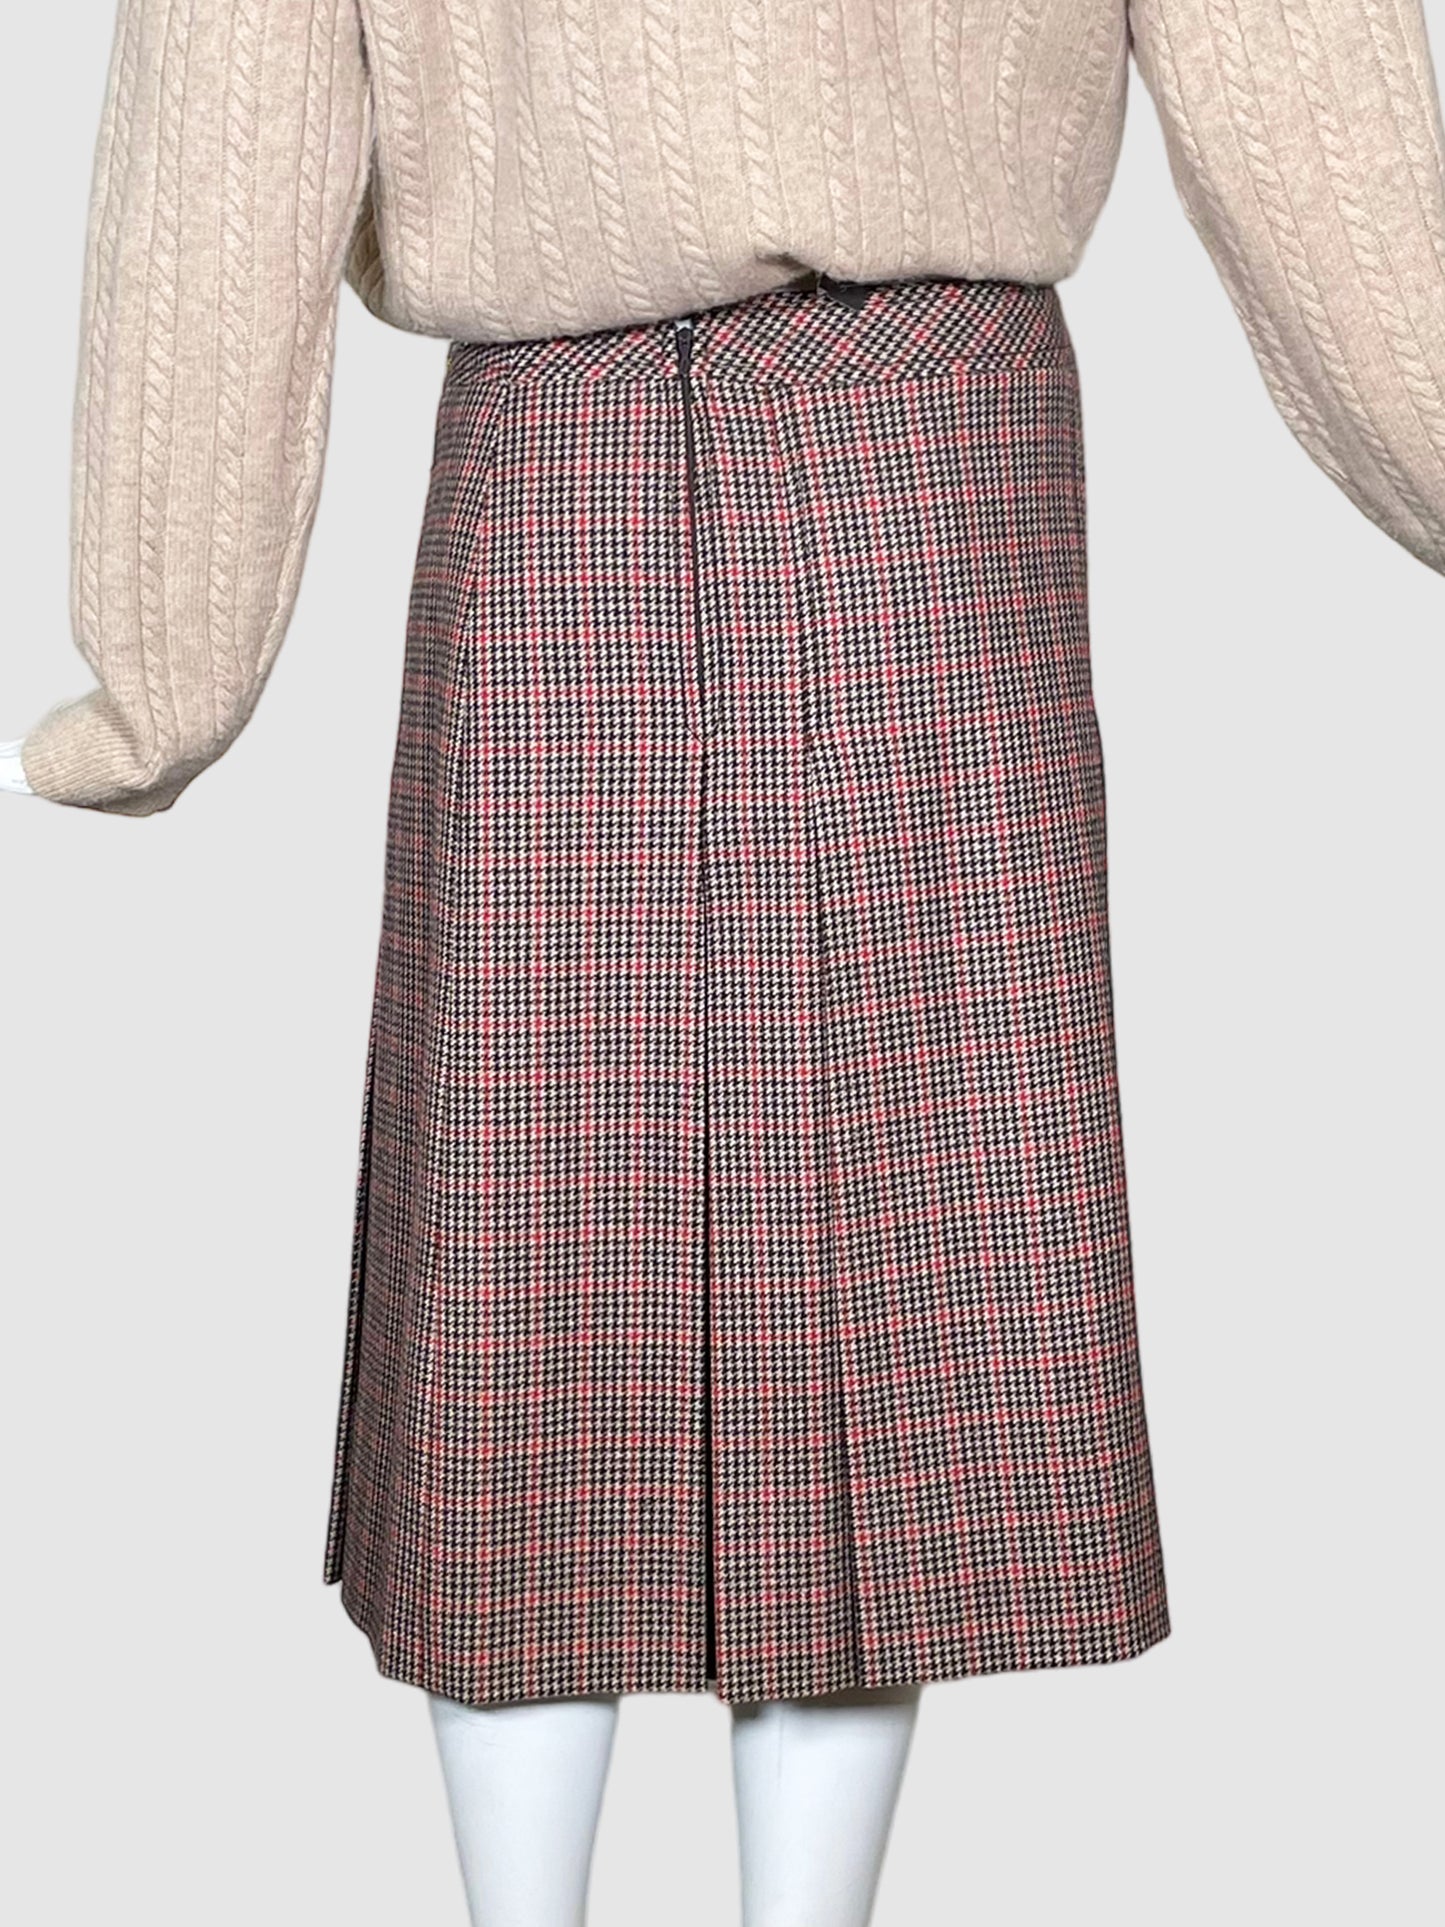 Celine Plaid Skirt - Size 44